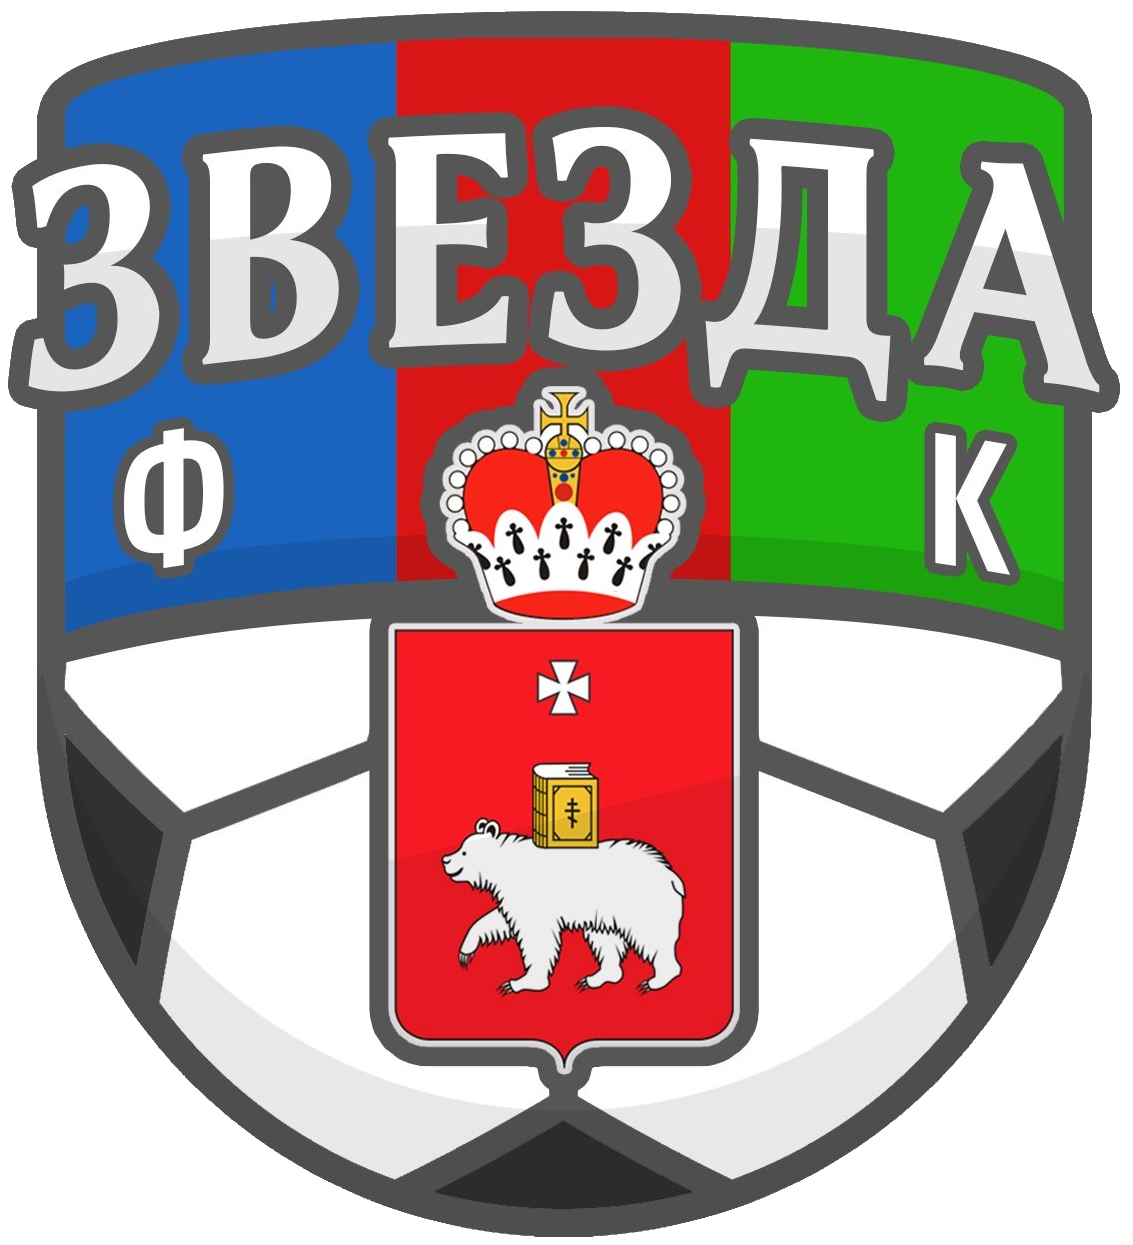 Zvezda Perm team logo